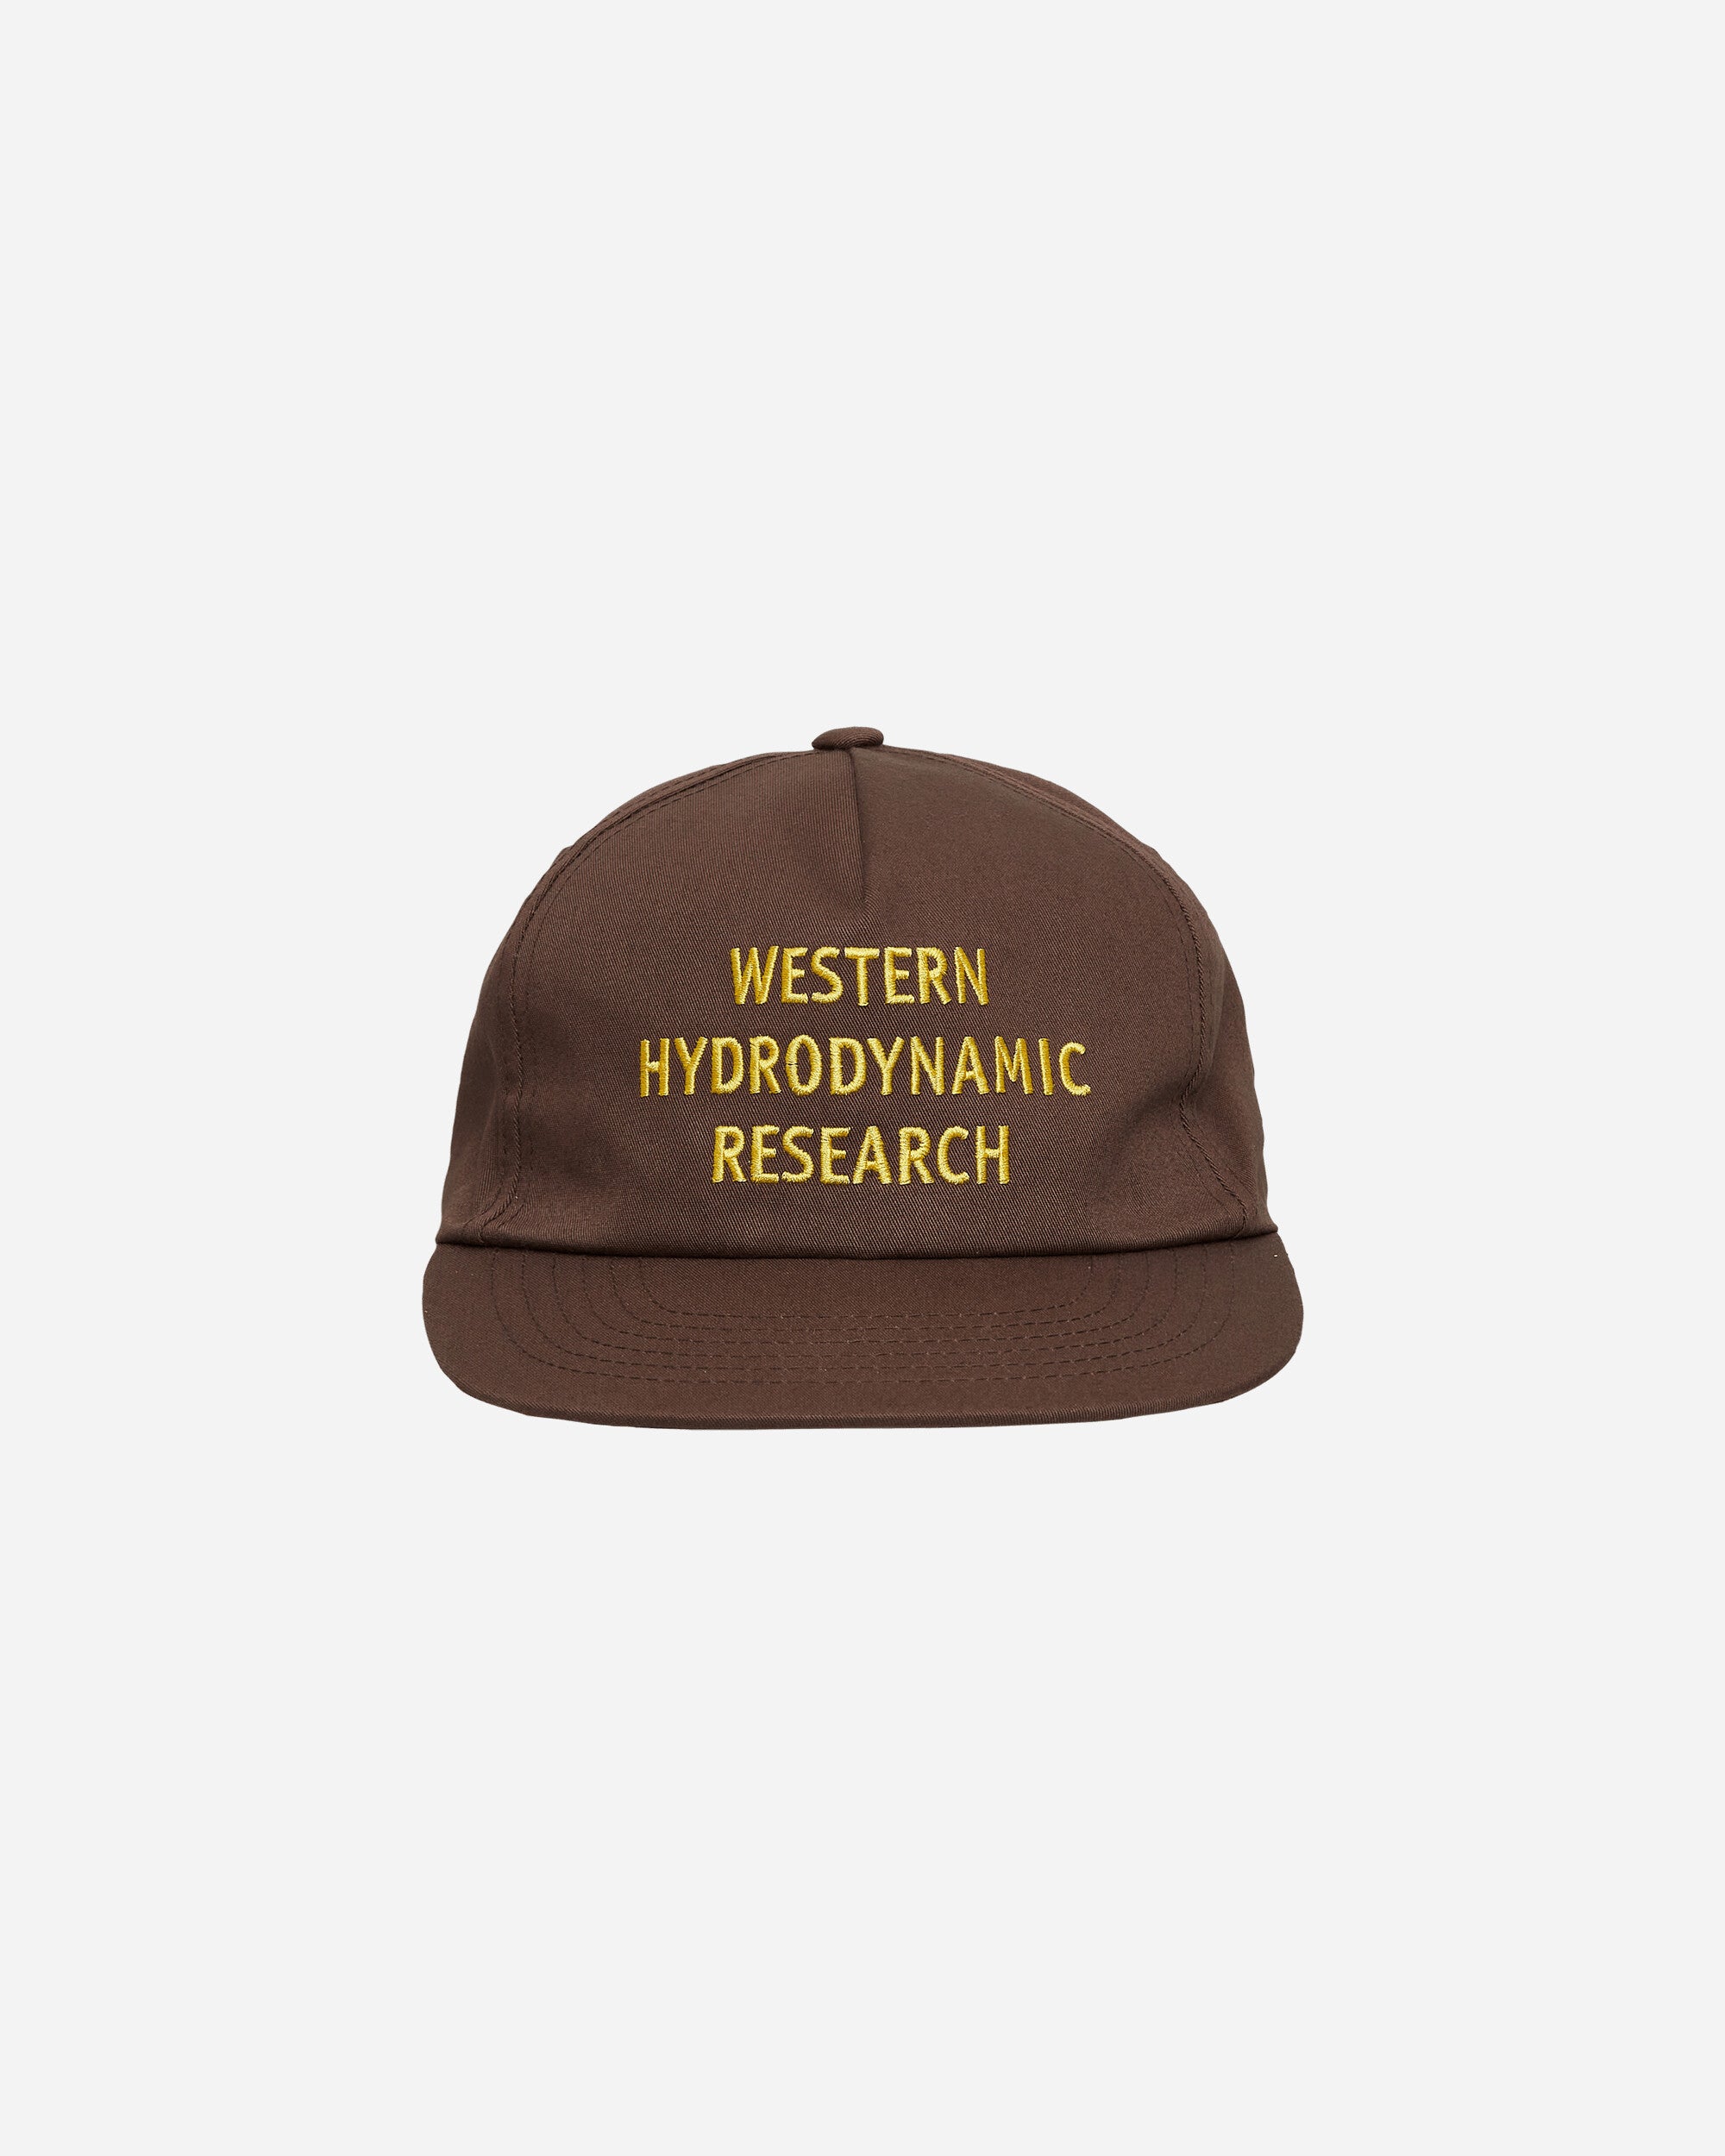 WESTERN HYDRODYNAMIC RESEARCH Promo Hat Brown Hats Caps MWHR24SPSU4001 BROWN